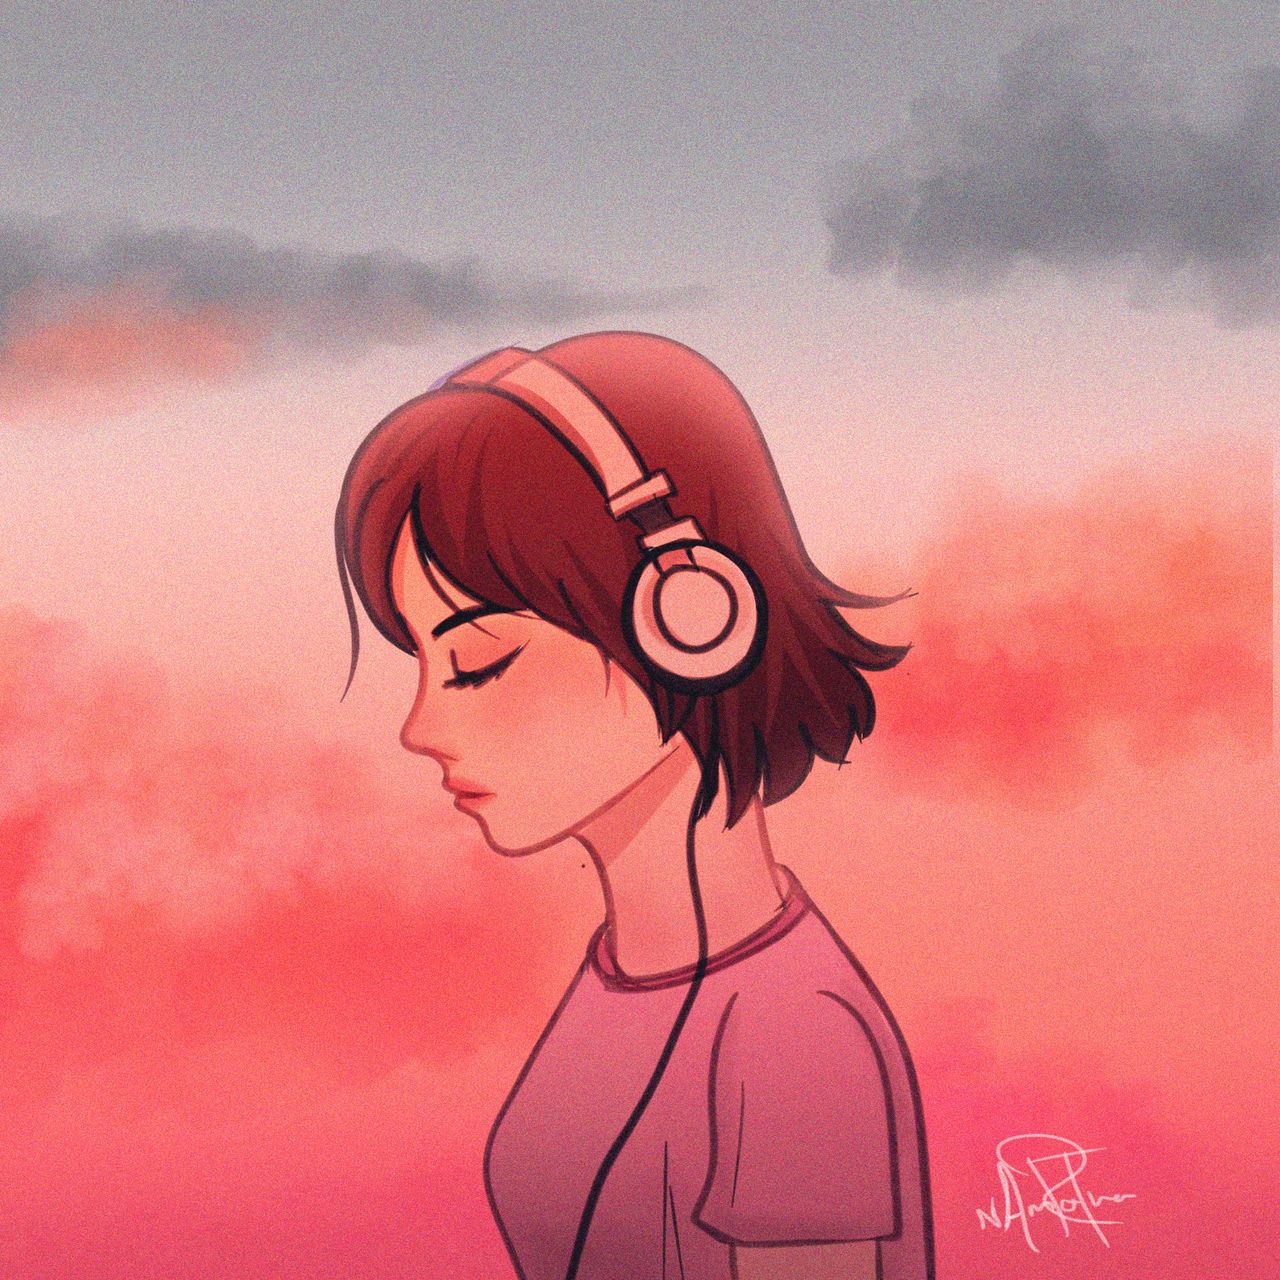 Girl listening to music by namratha7 on DeviantArt